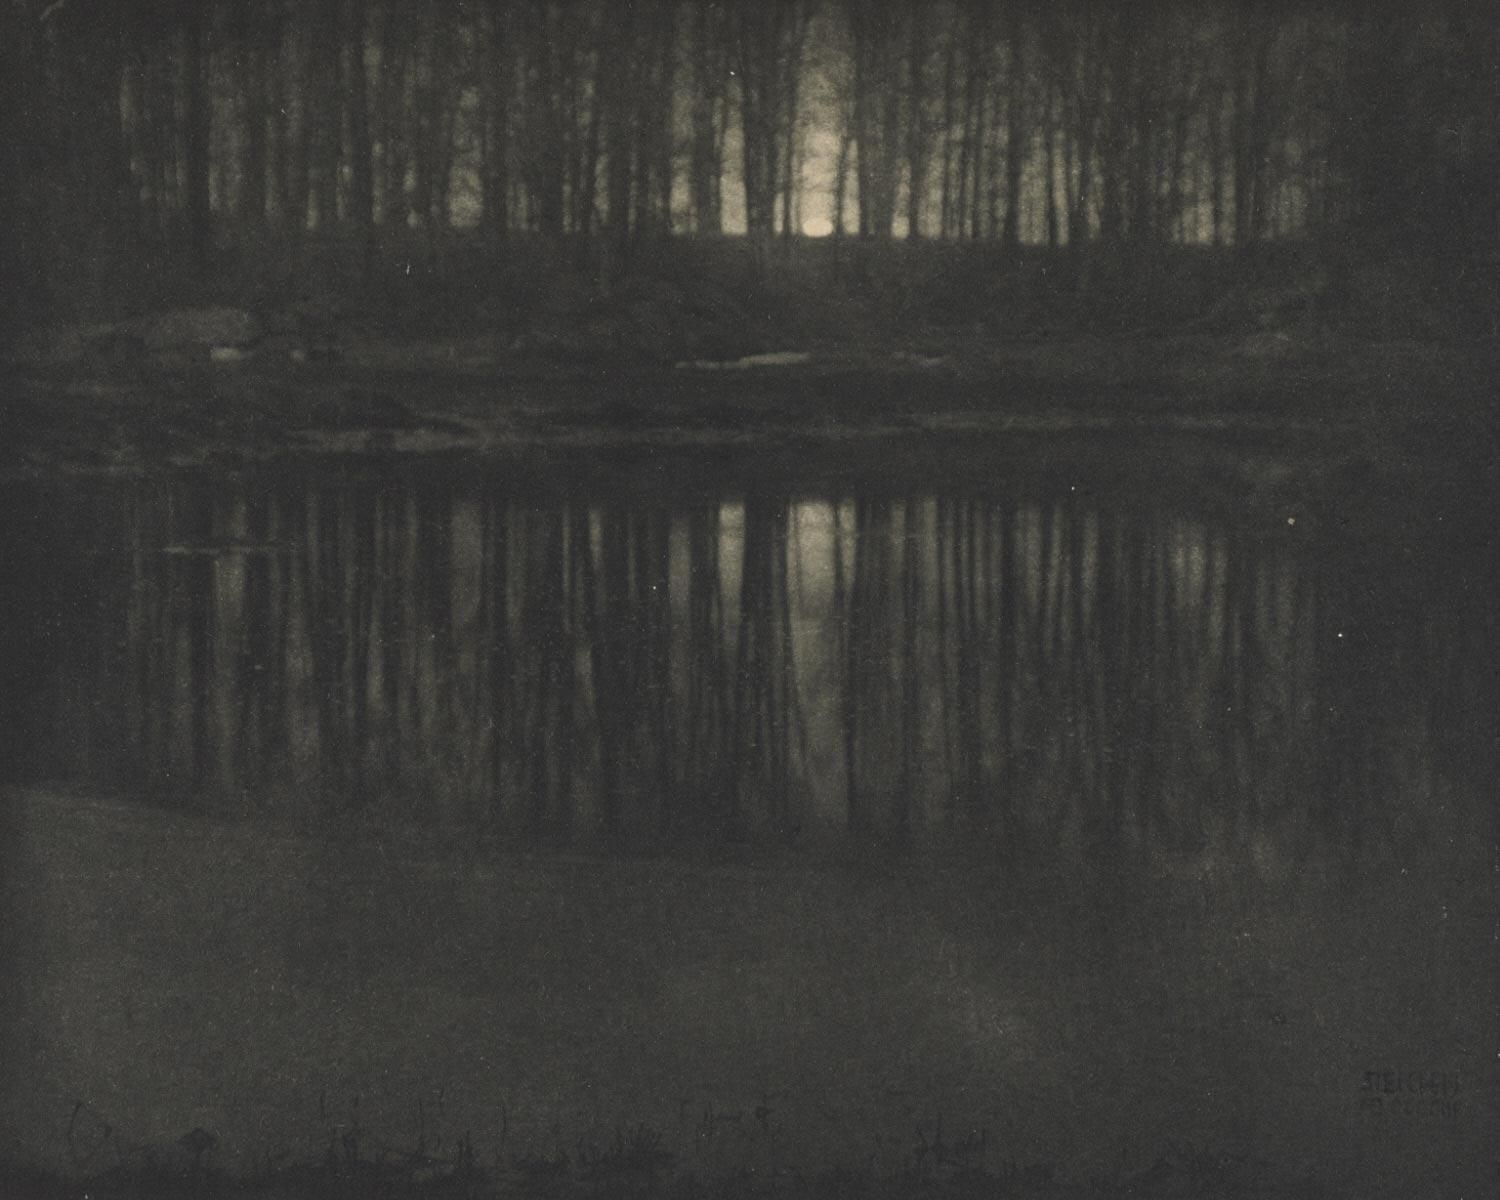 Moonlight: The Pond